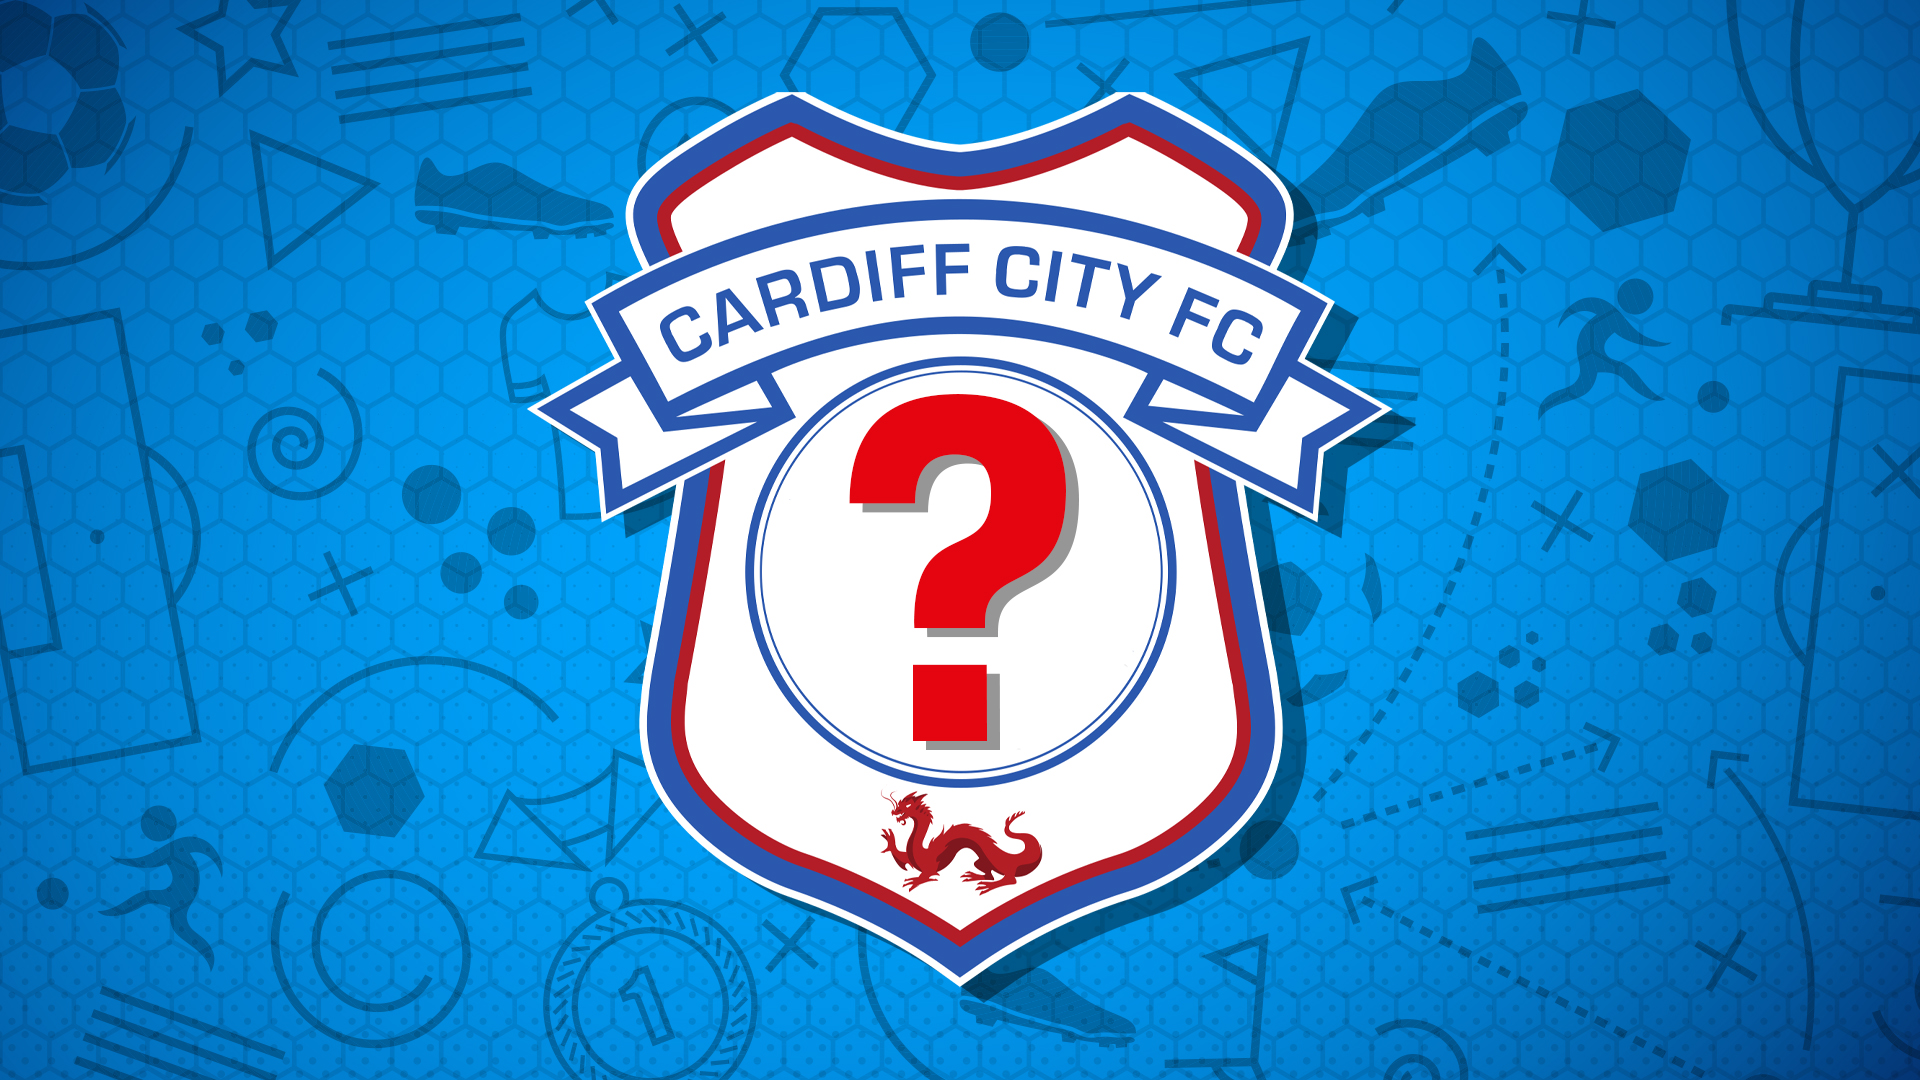 Cardiff City's badge